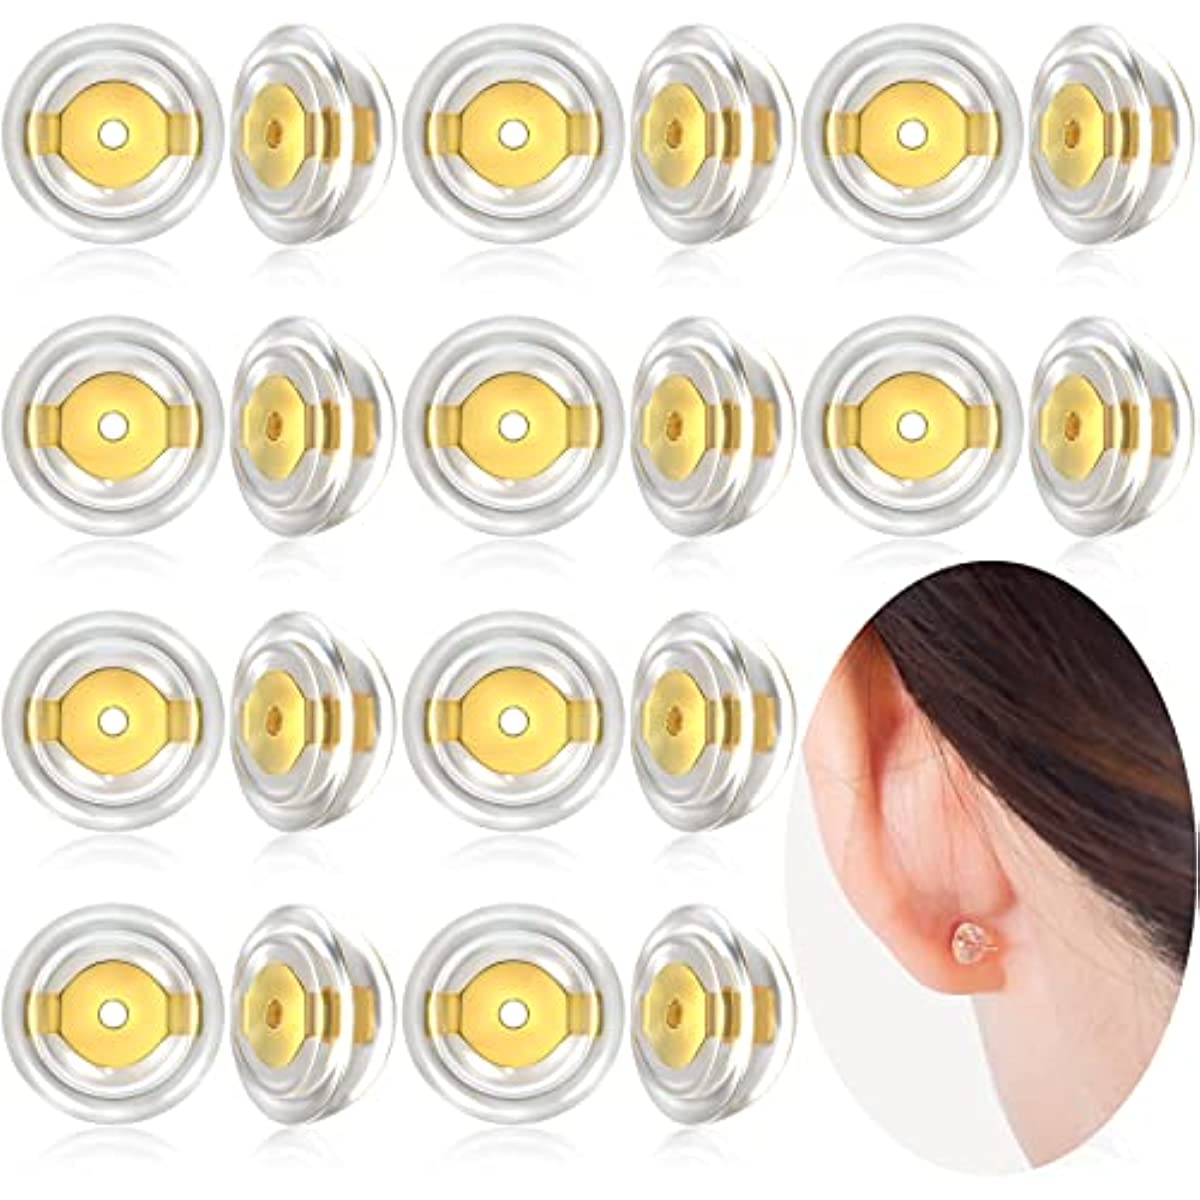 24Pcs/12Pair Silvery Copper Plated Earring Backs Replacements Earring Backs  Hypoallergenic Secure Earring Backs For Studs Hooks Earrings